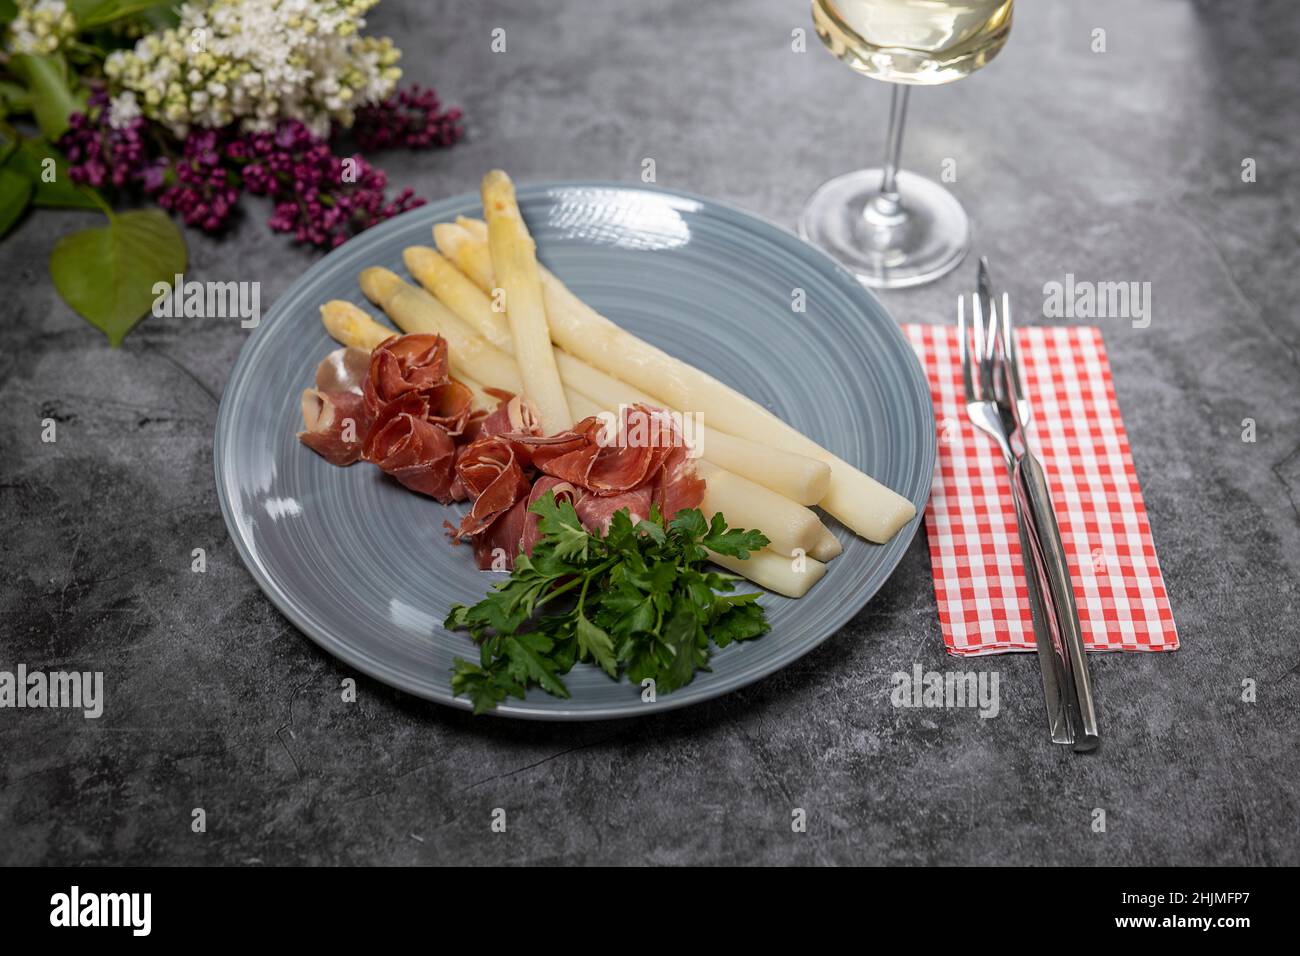 white asparagus with Serrano ham Stock Photo